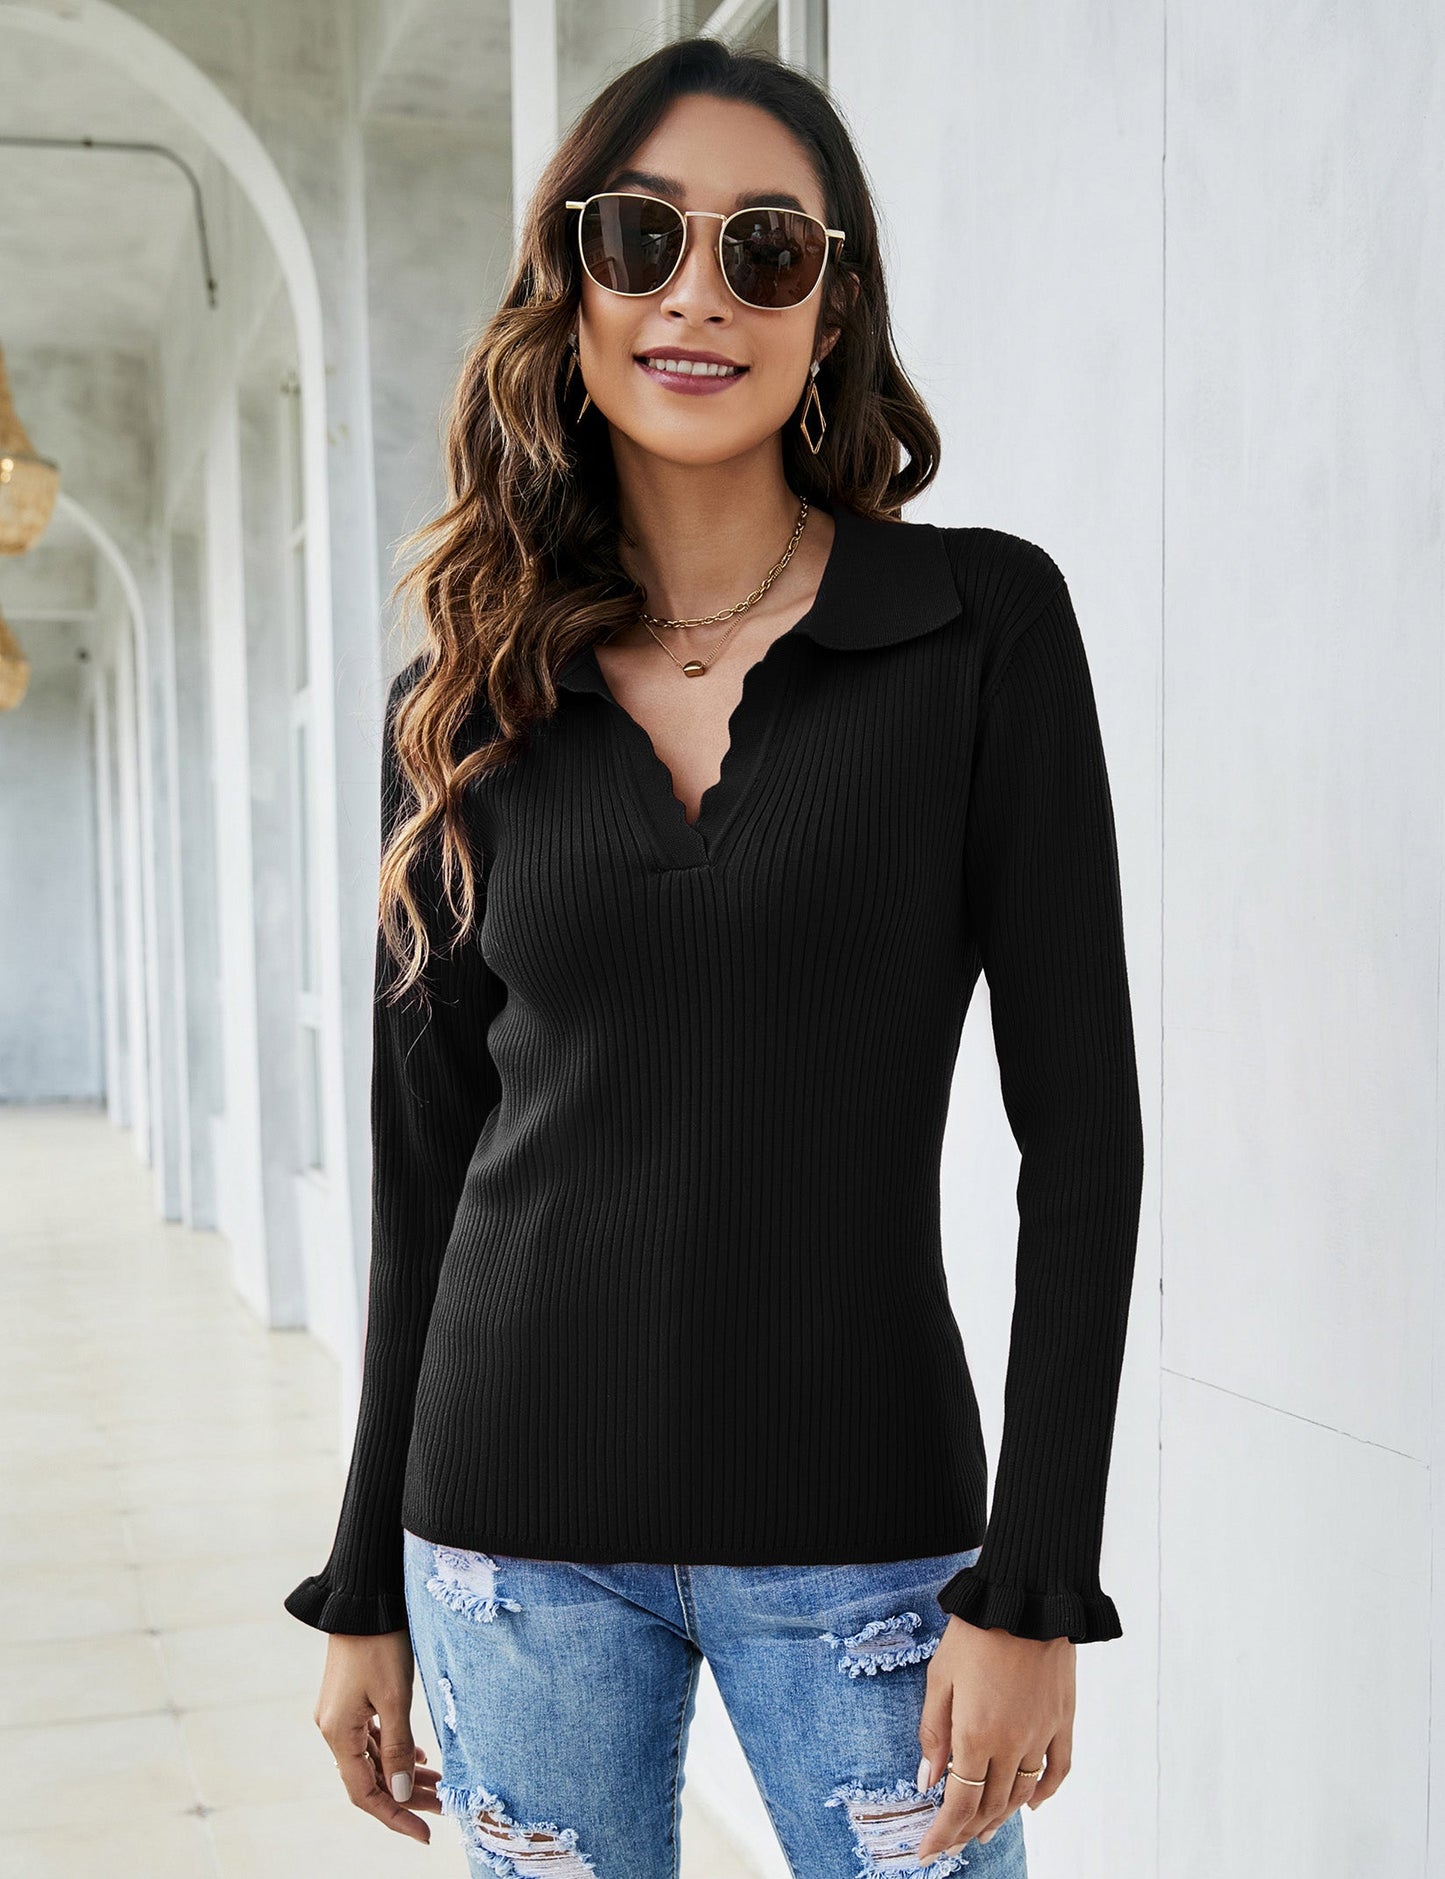 YESFASHION Women's Off Shoulder Top Long Sleeve T-Shirt Black